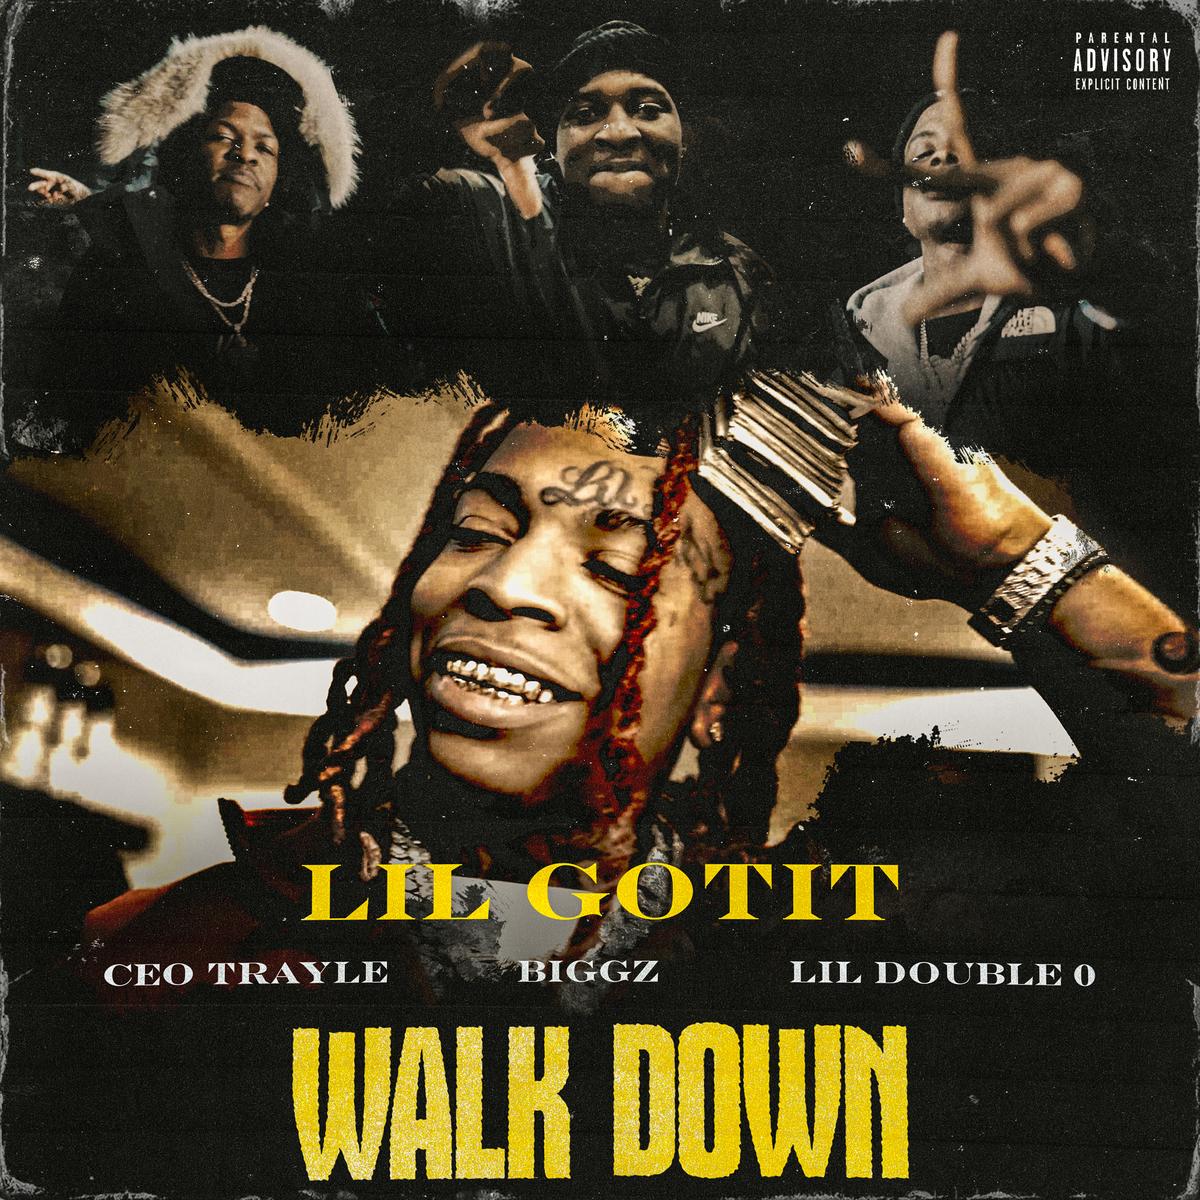 DOWNLOAD MP3: Lil Gotit - Walk Down Ft. CEO Trayle, Lil Double 0 & Biggz